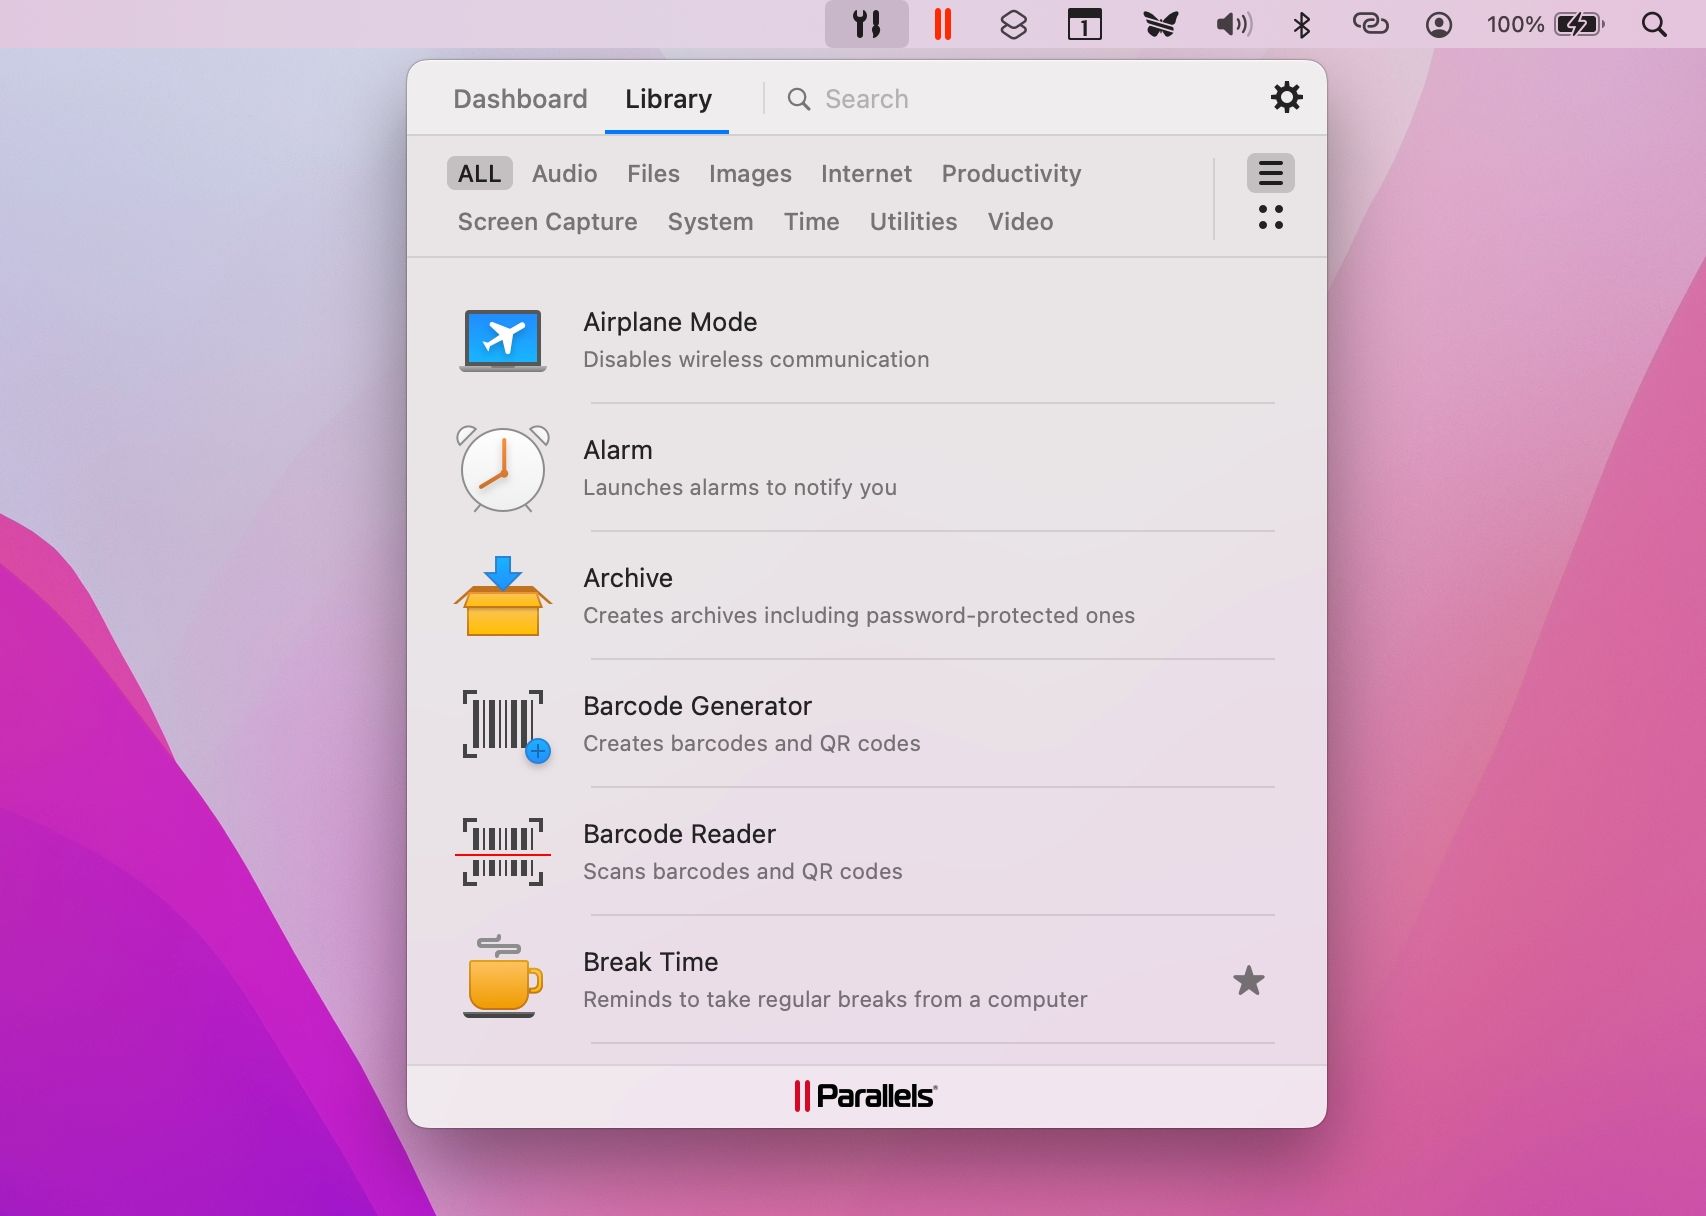 Accessing Parallels Desktop Toolbox from the macOS menu bar